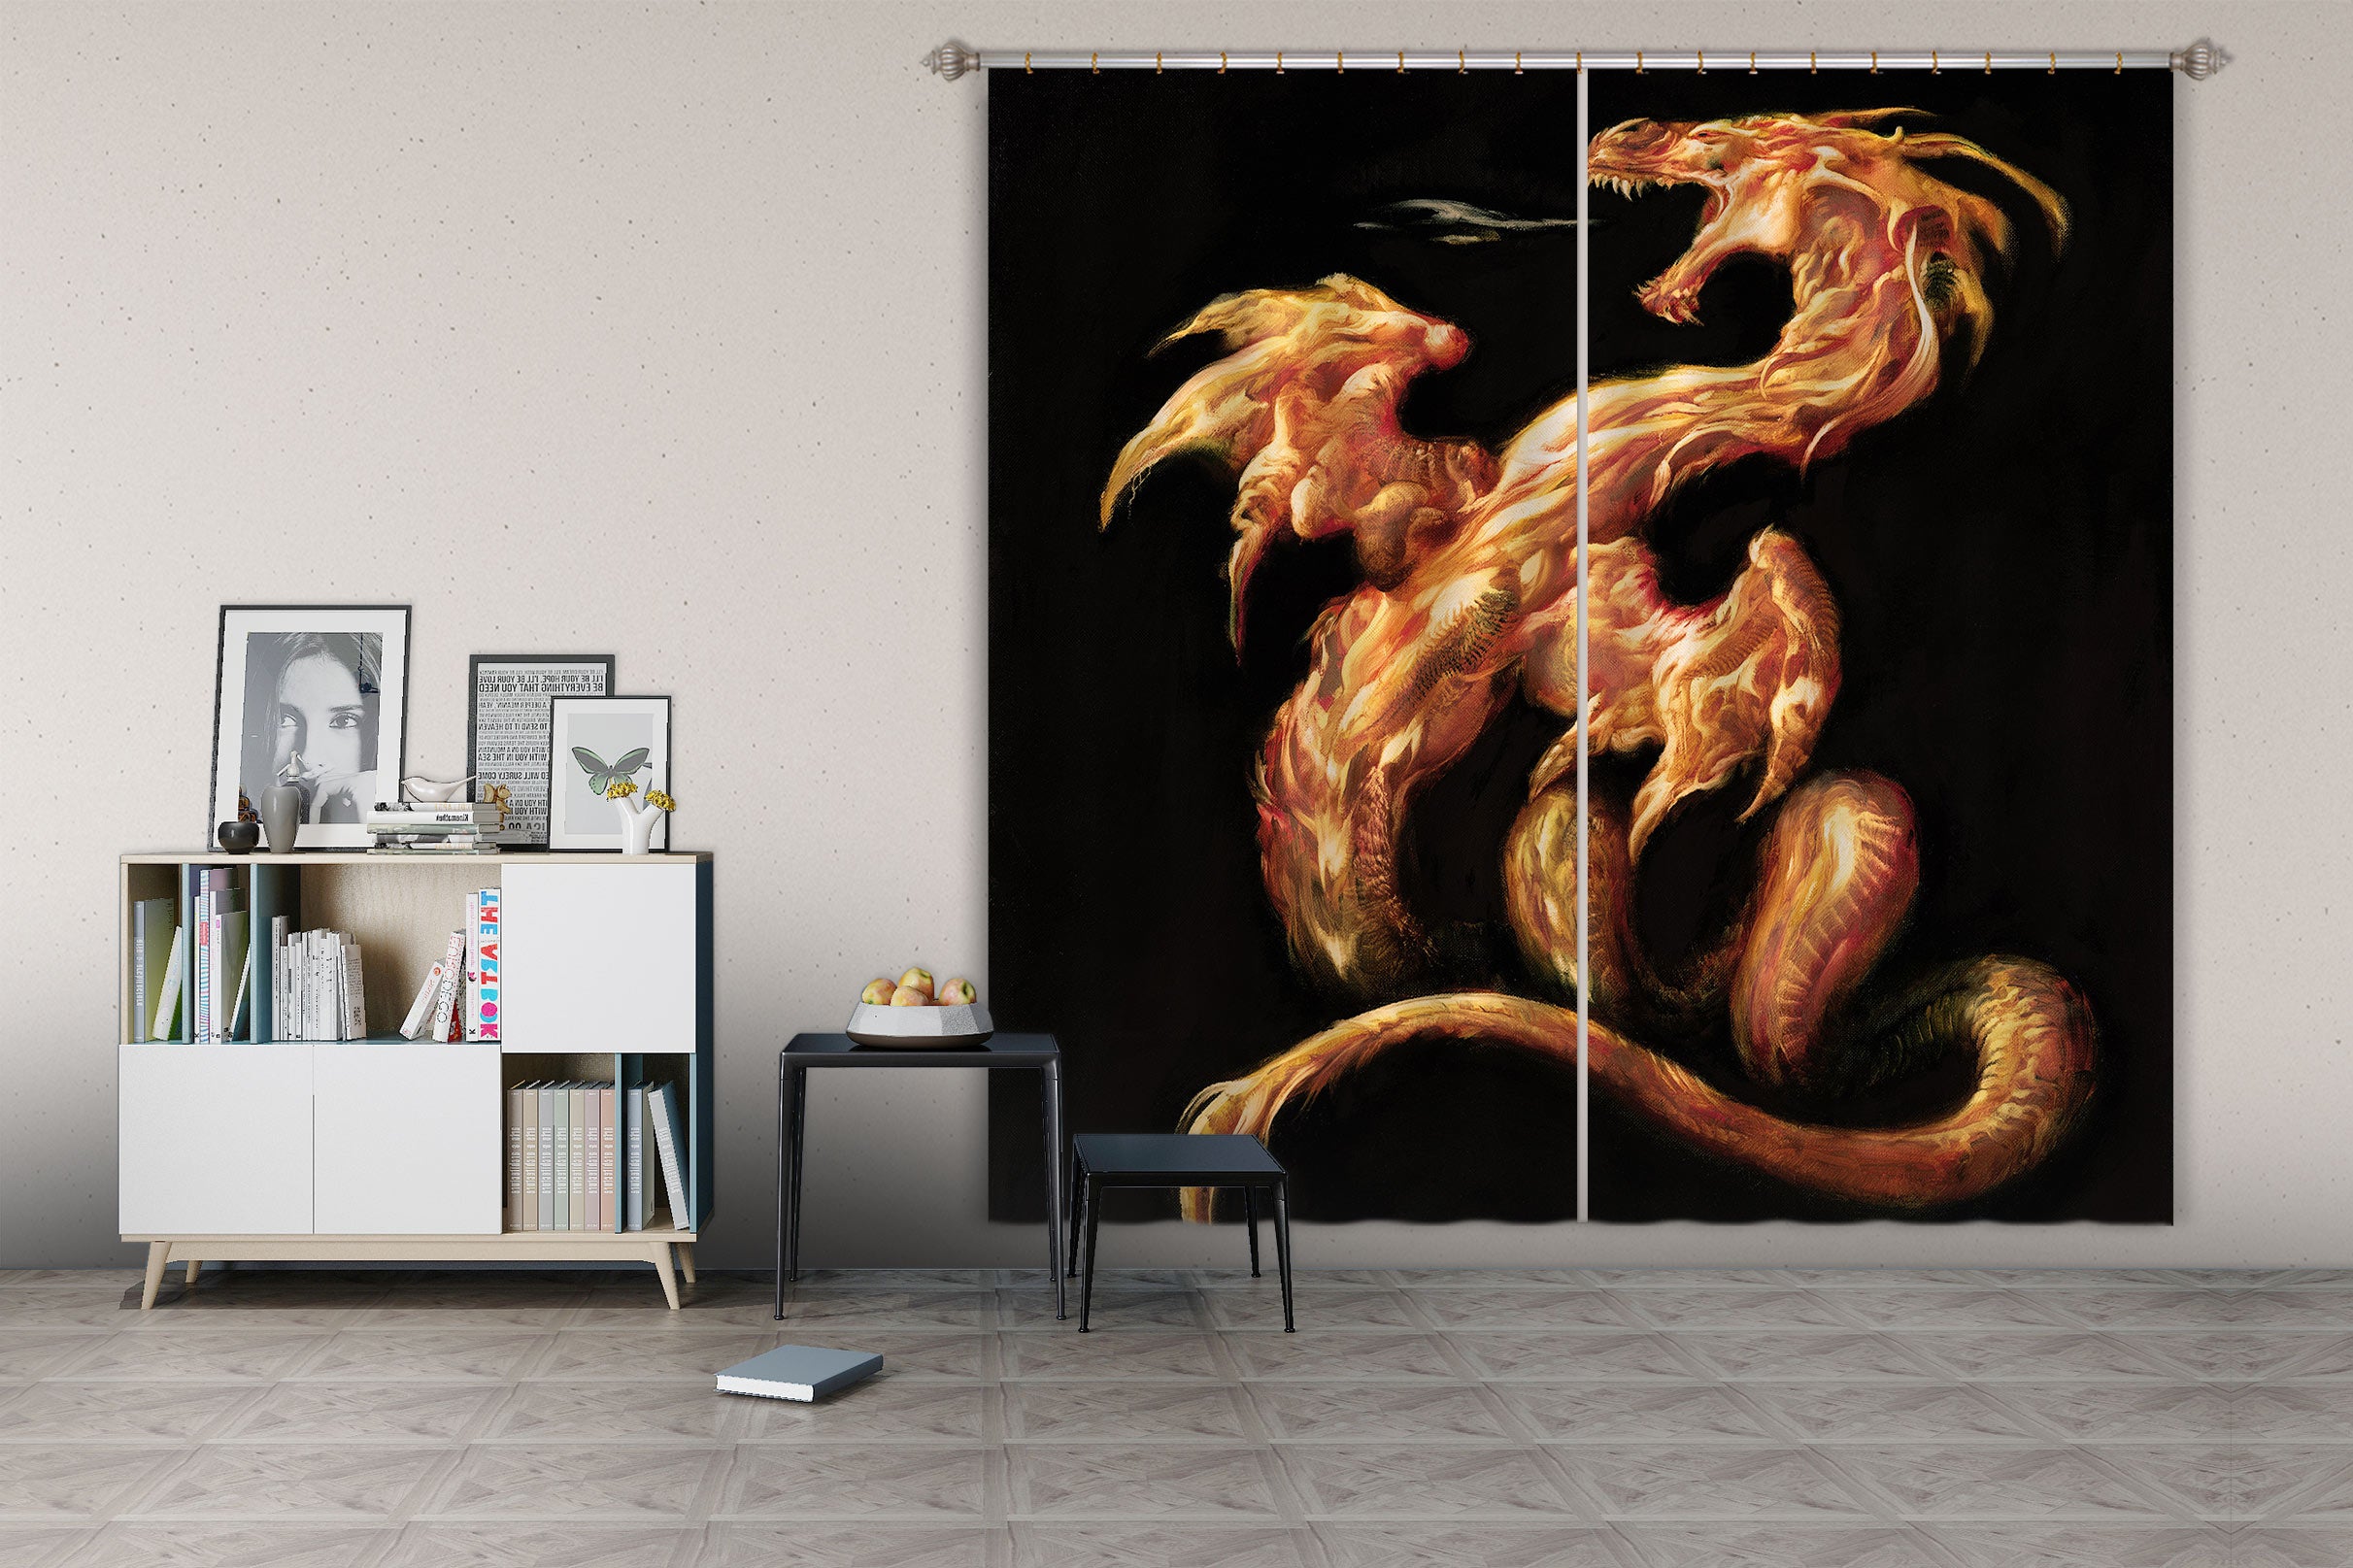 3D Dragon Golden 8008 Ciruelo Curtain Curtains Drapes